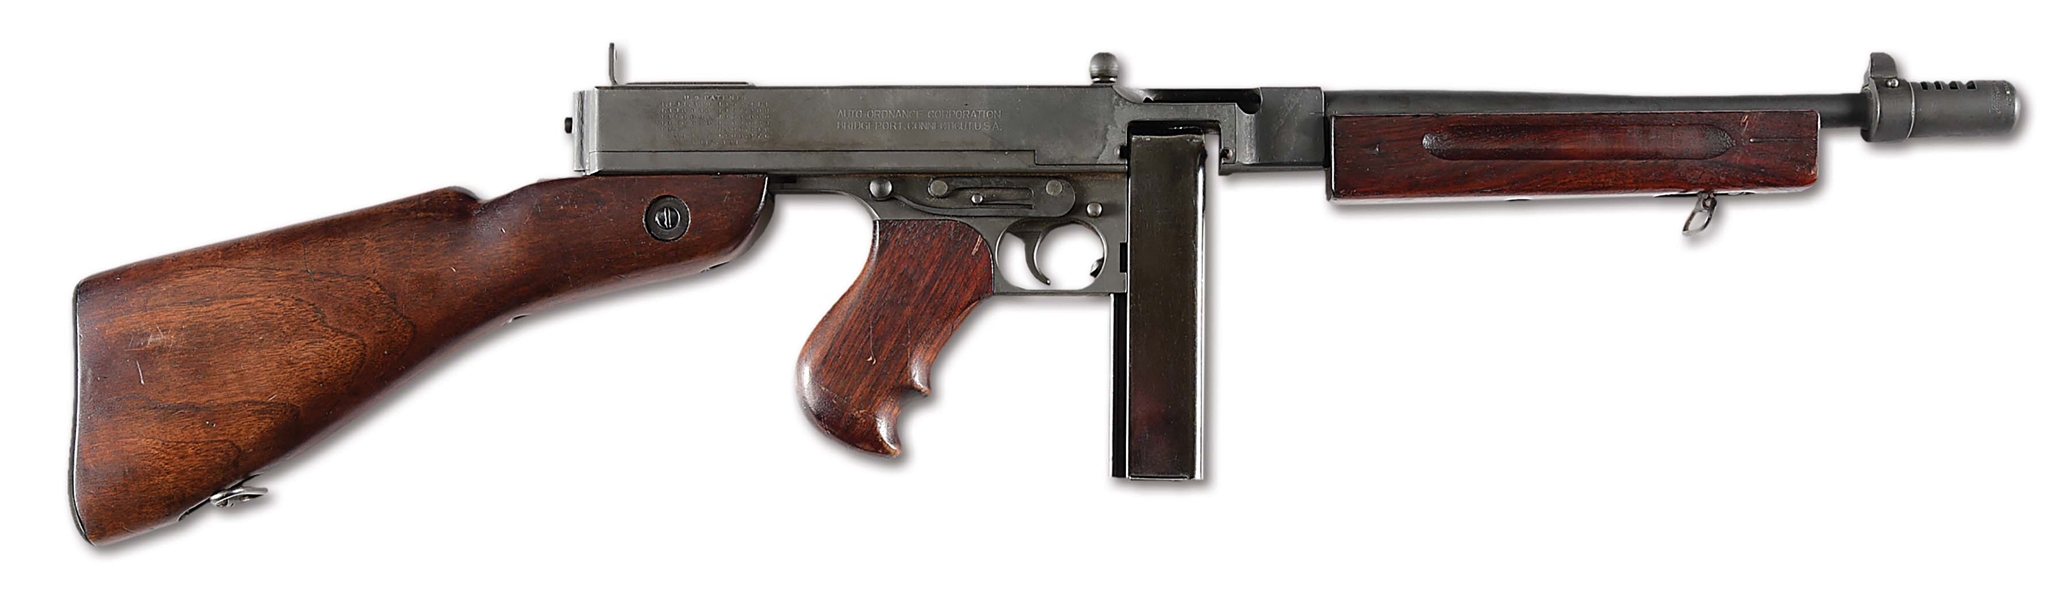 (N) VERY ATTRACTIVE AUTO ORDNANCE 1928A1 THOMPSON MACHINE GUN (CURIO AND RELIC).